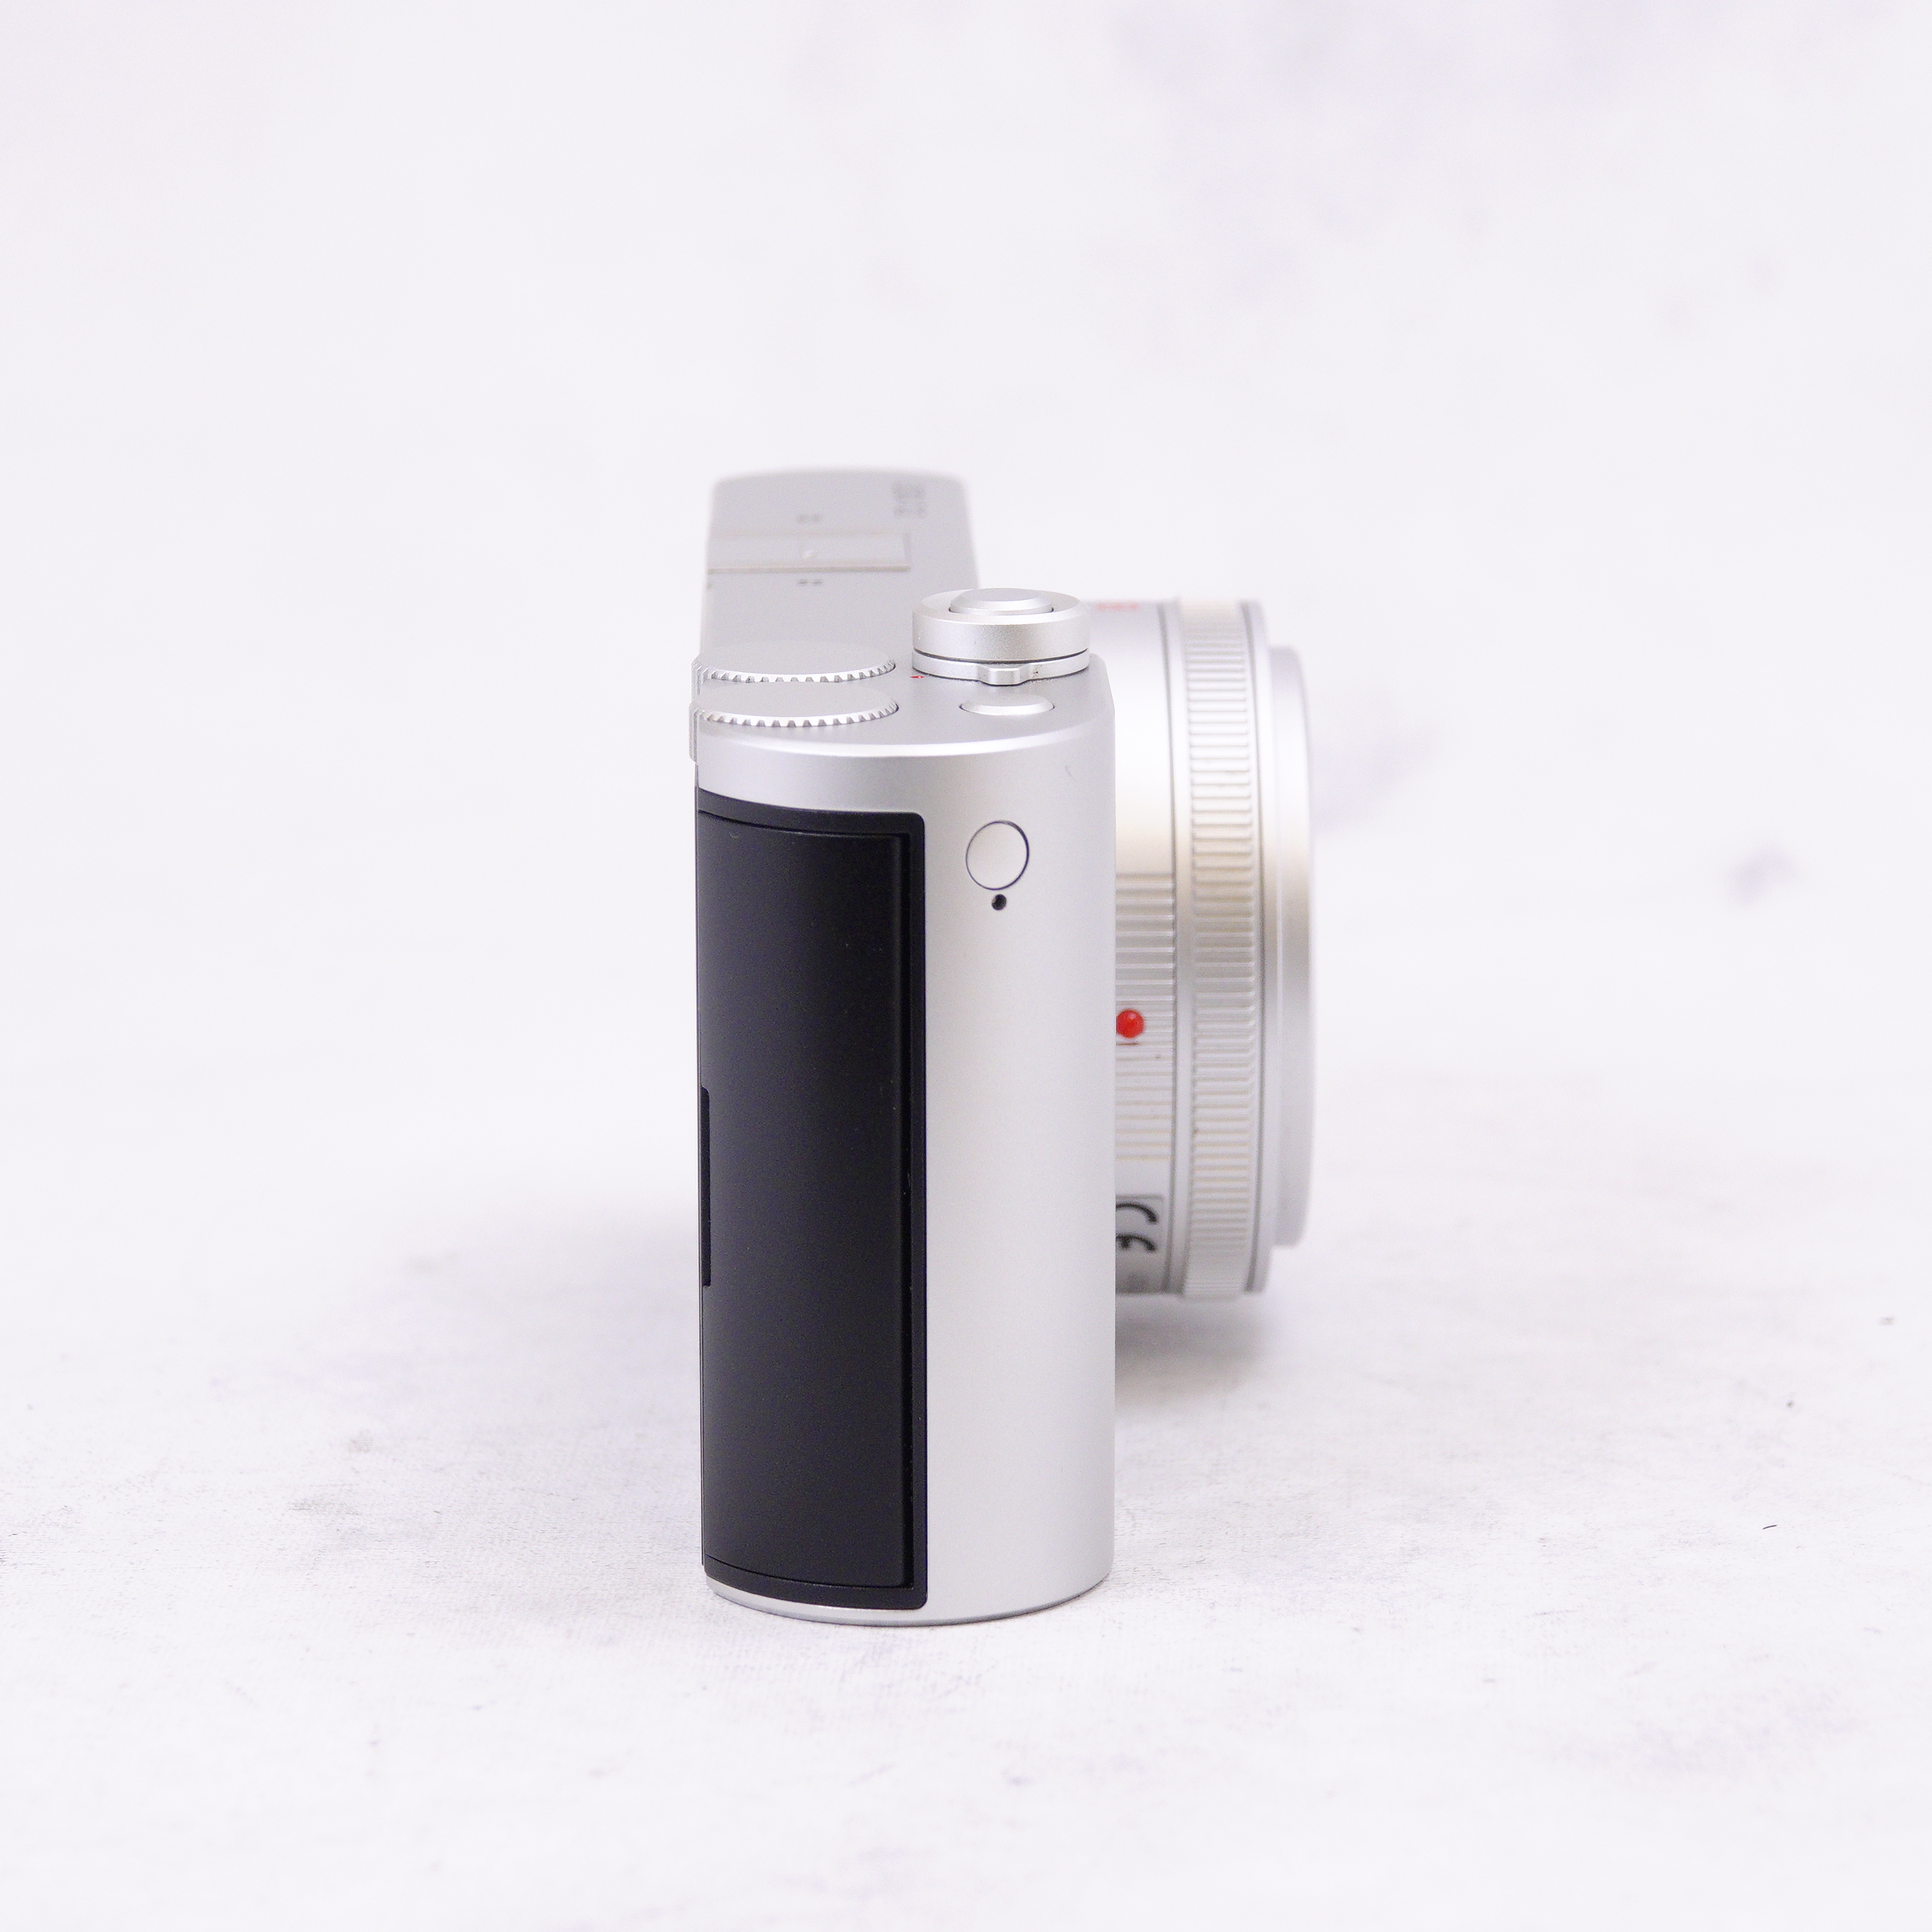 Leica TL2 con 3 lentes y Leica Visoflex (Typ 020) - Usado